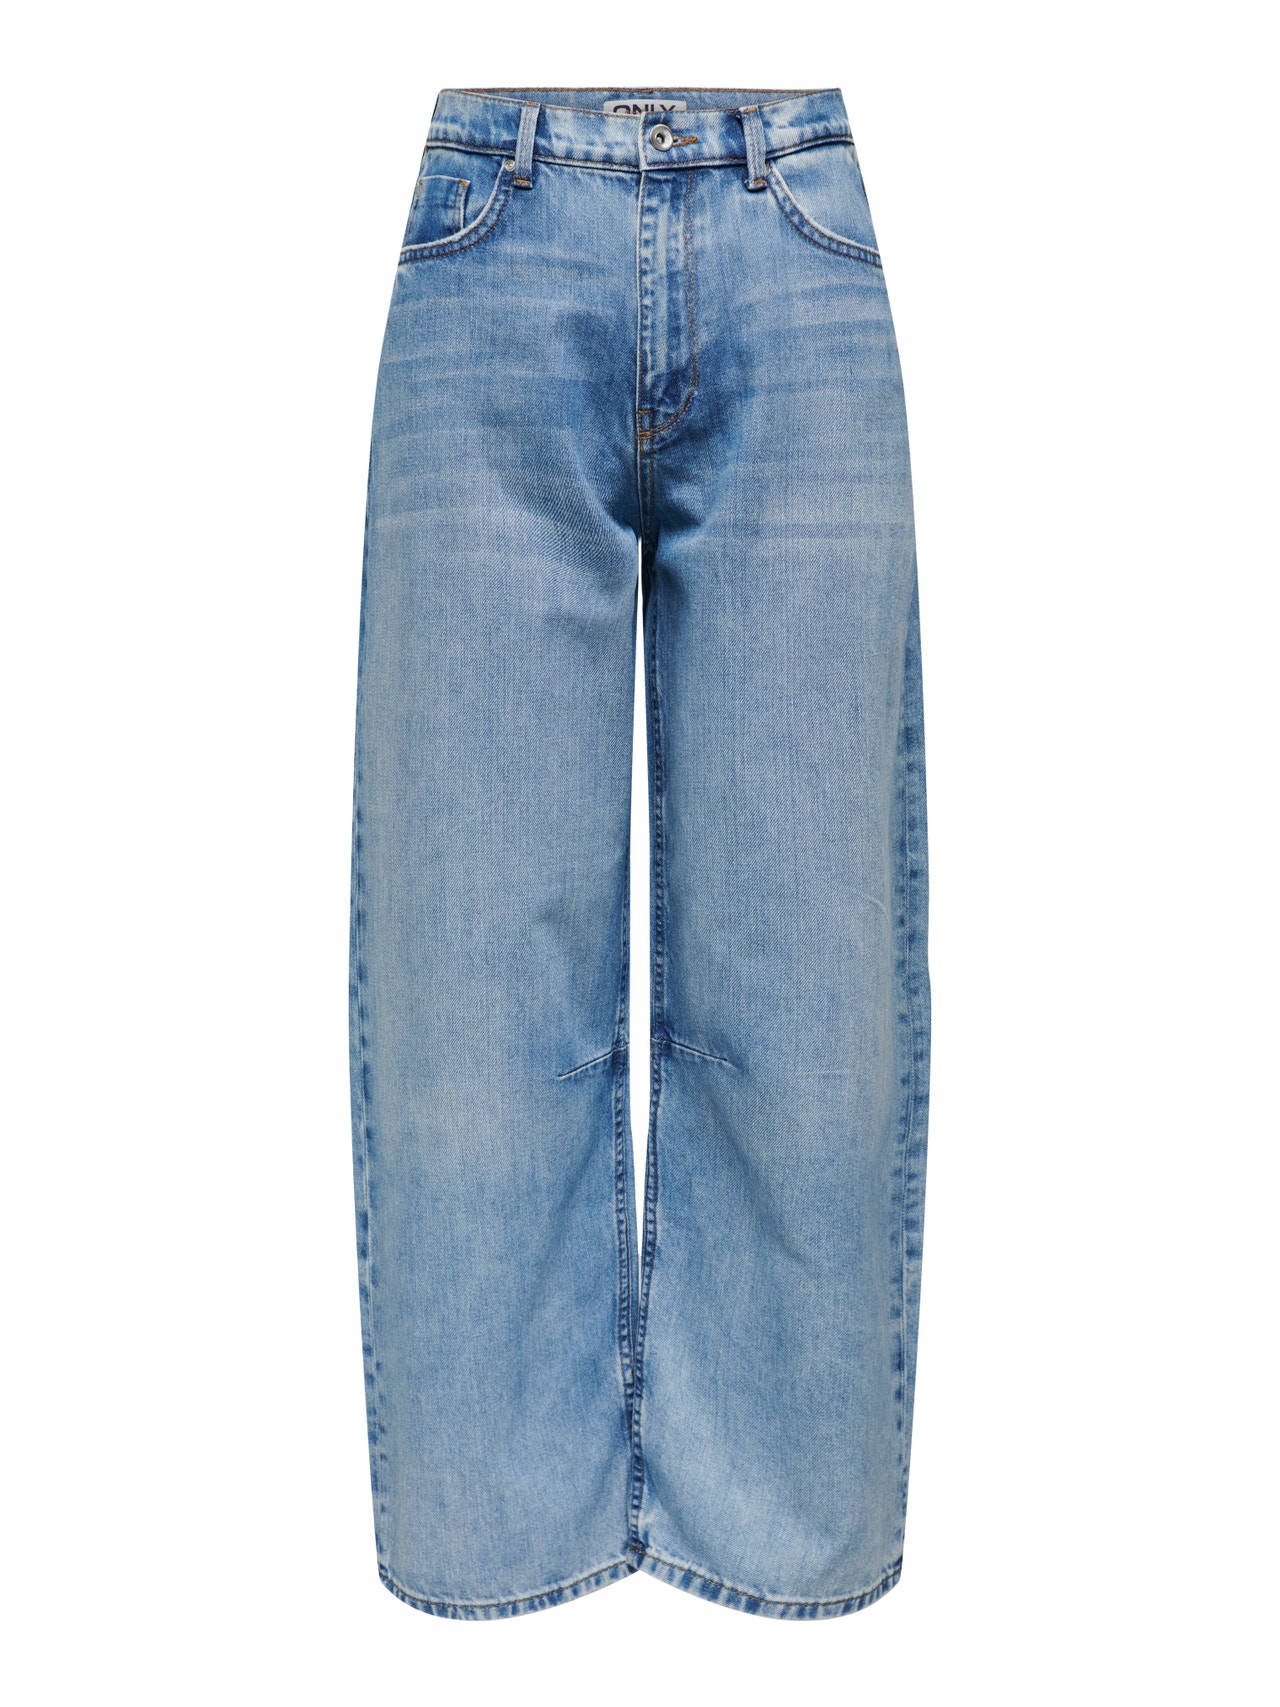 Loose High Waist Jeans - Denim blue - Ladies